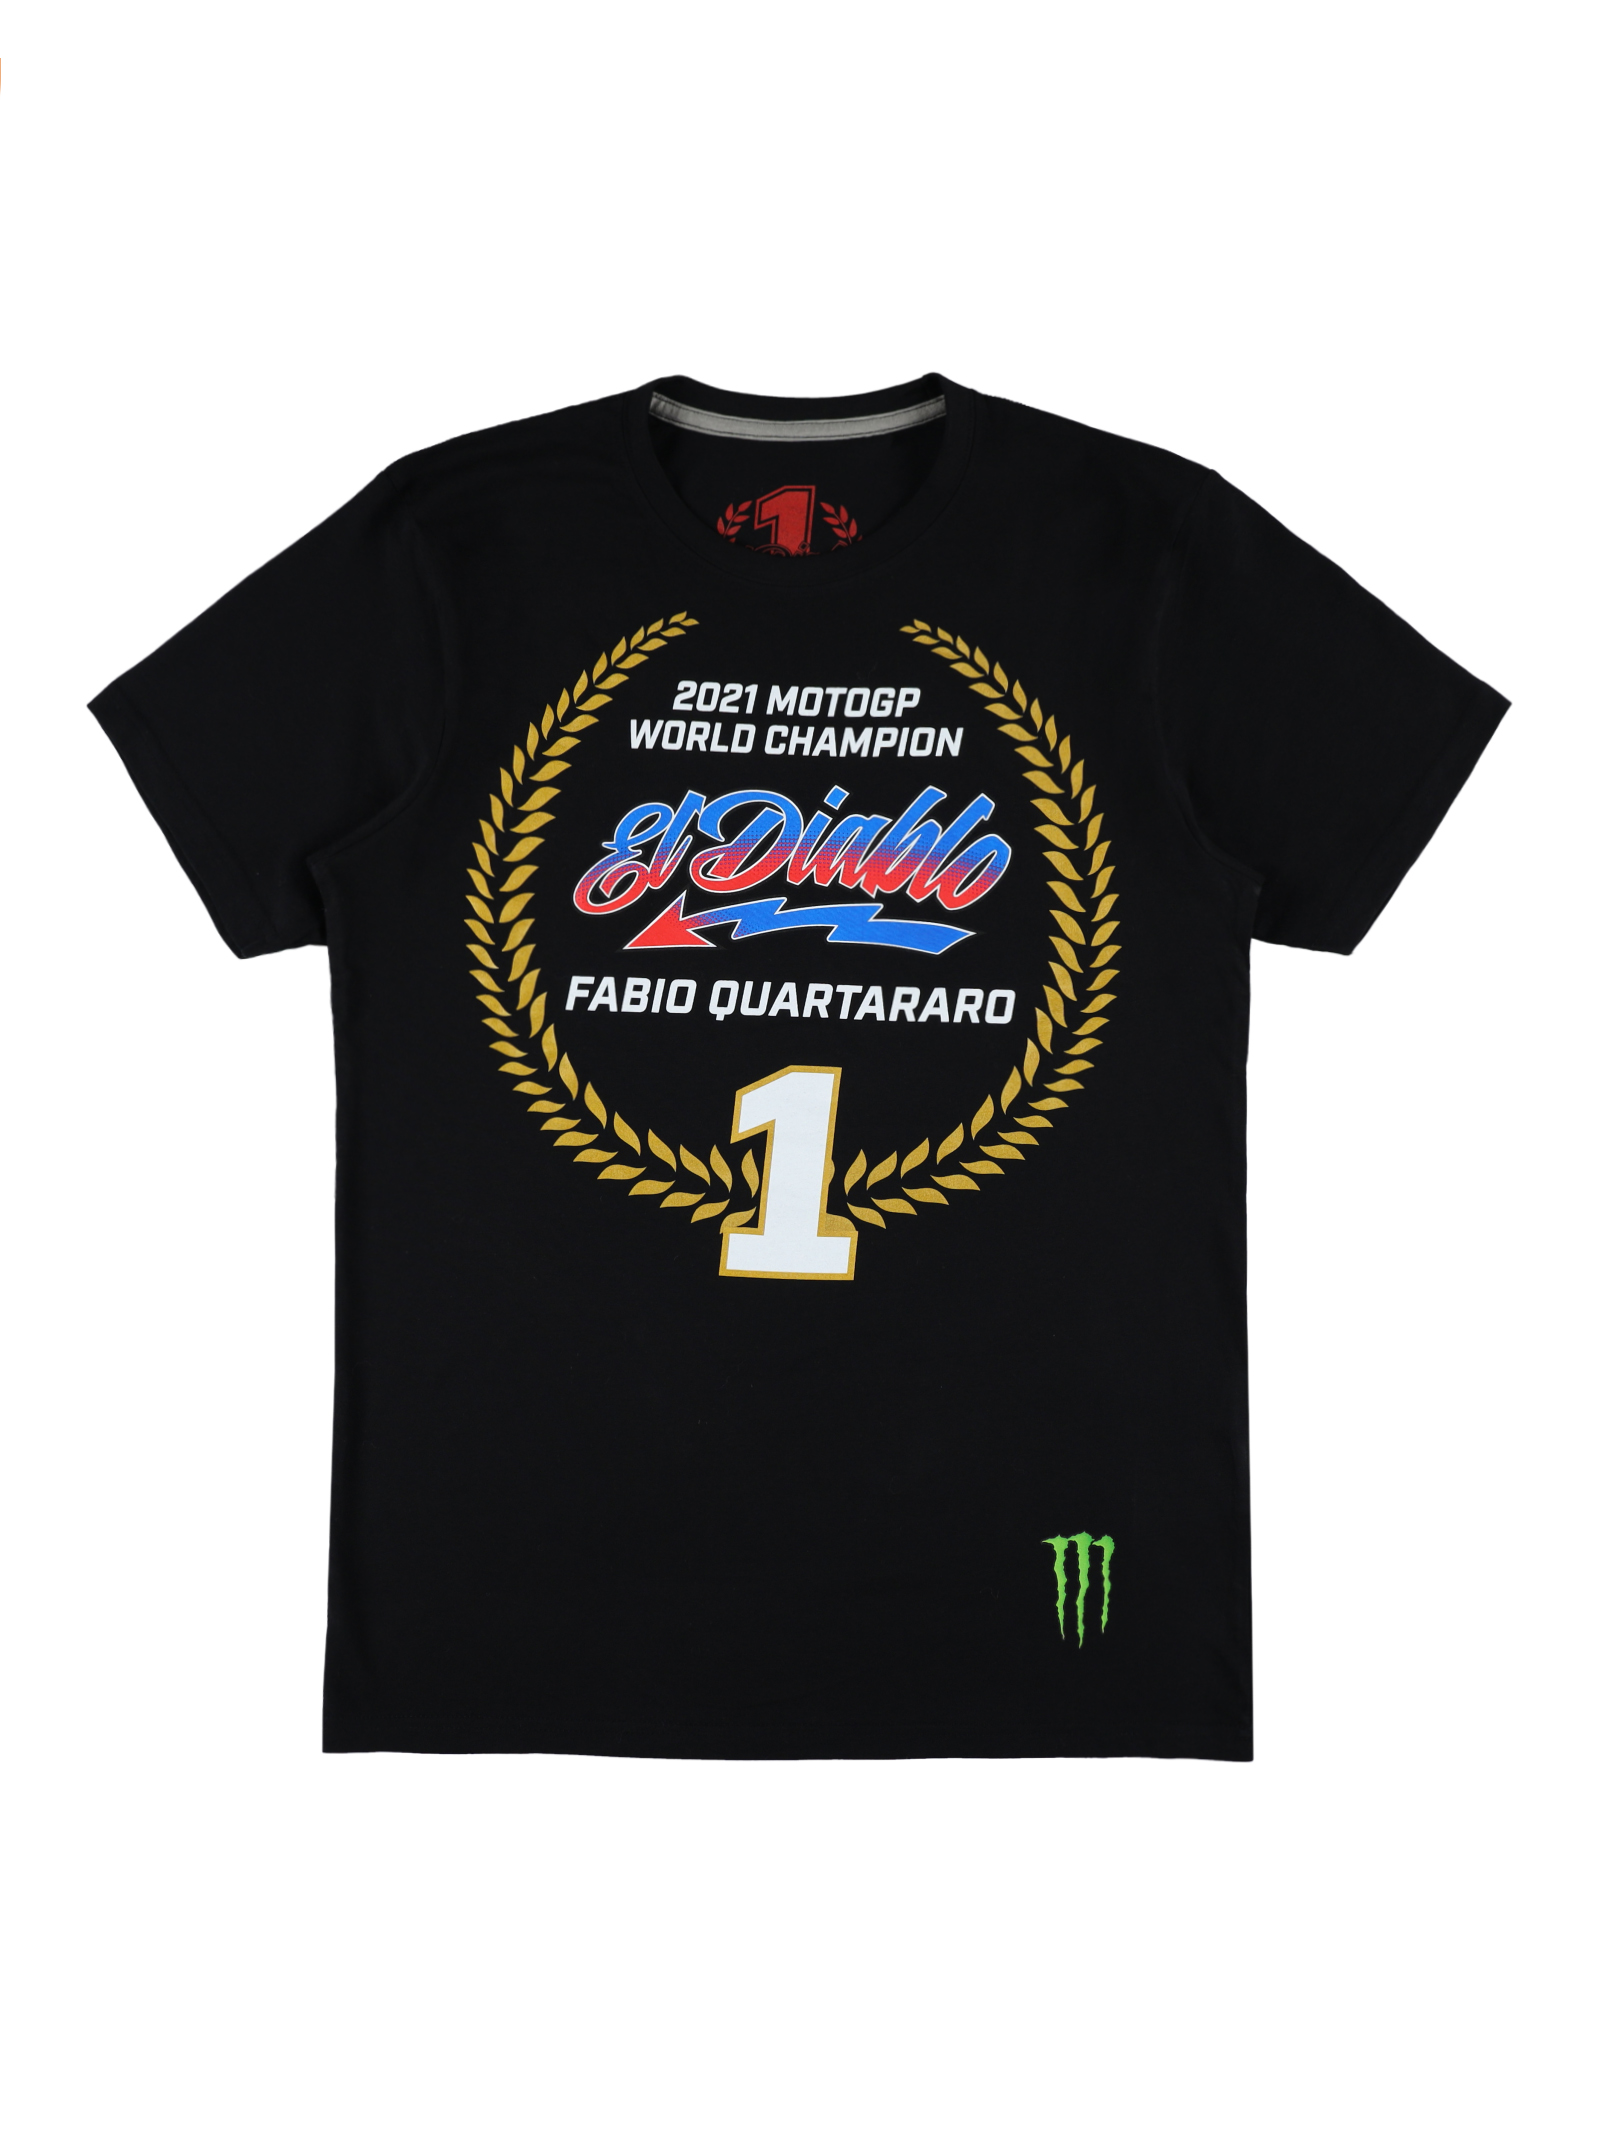 T-shirt Fabio Quartararo Champion du Monde 2021 noir vue devant